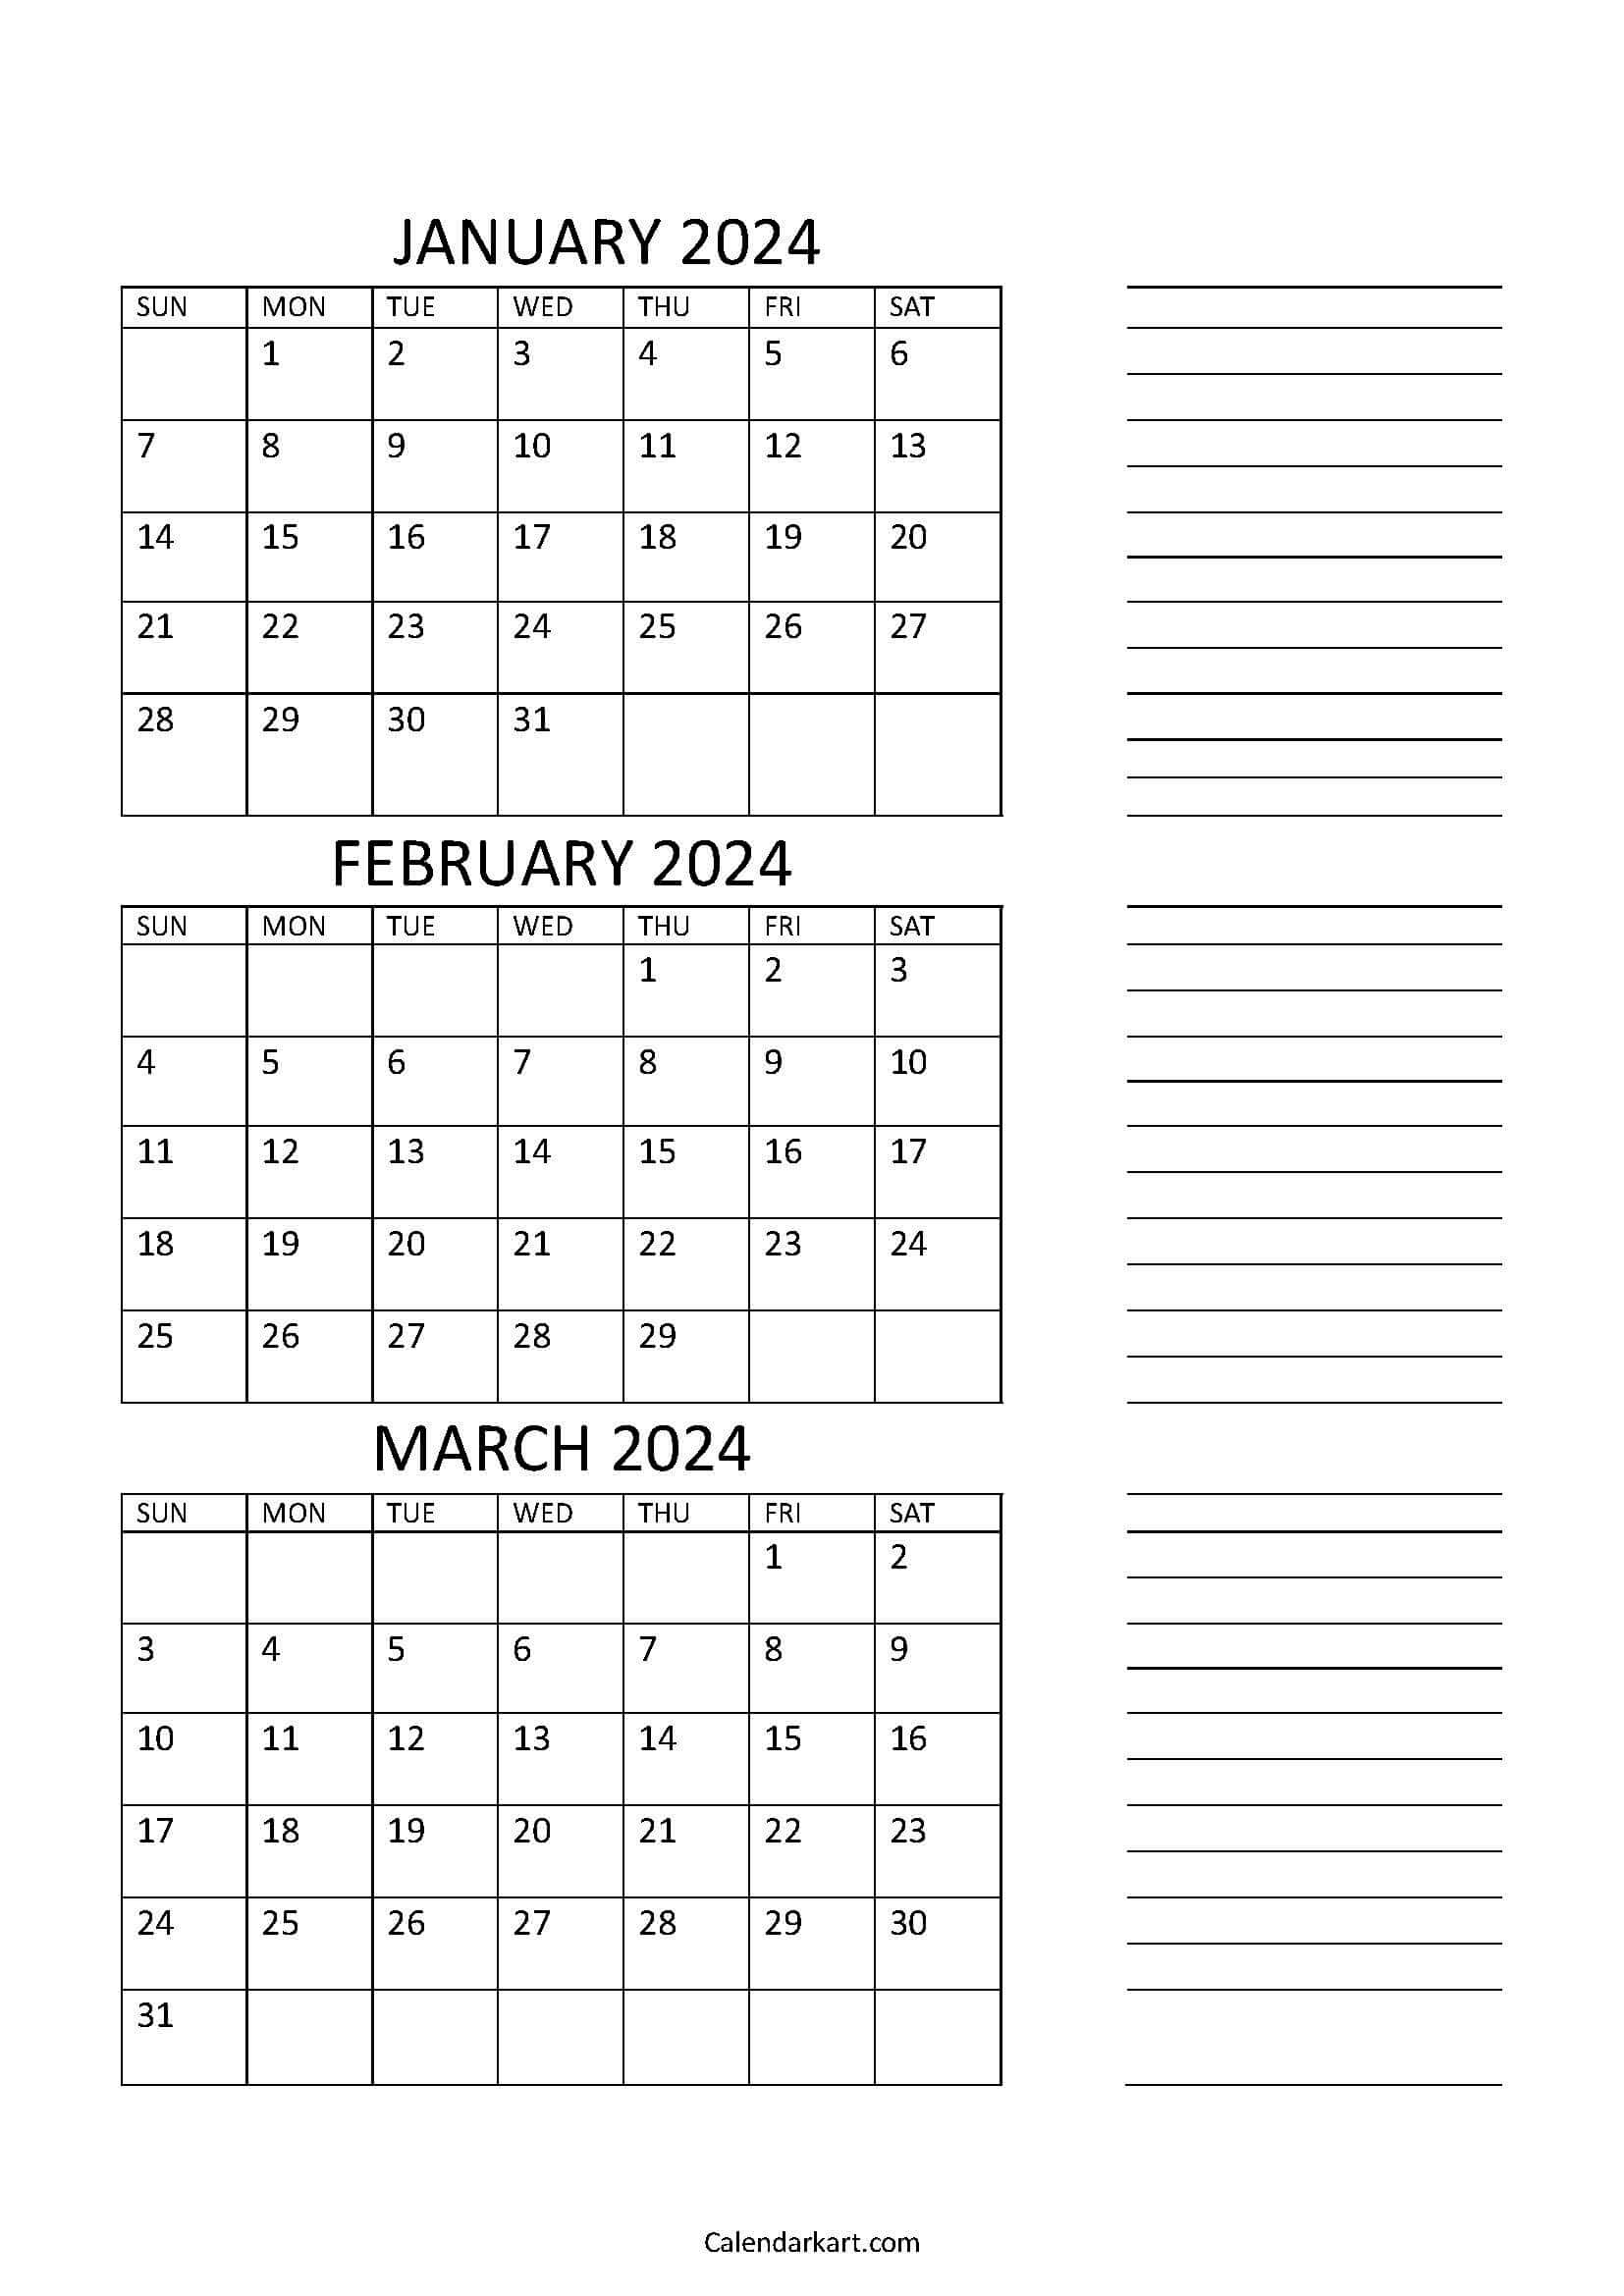 Free Printable January To March 2024 Calendar - Calendarkart throughout Free Printable Bi Monthly Calendar 2024